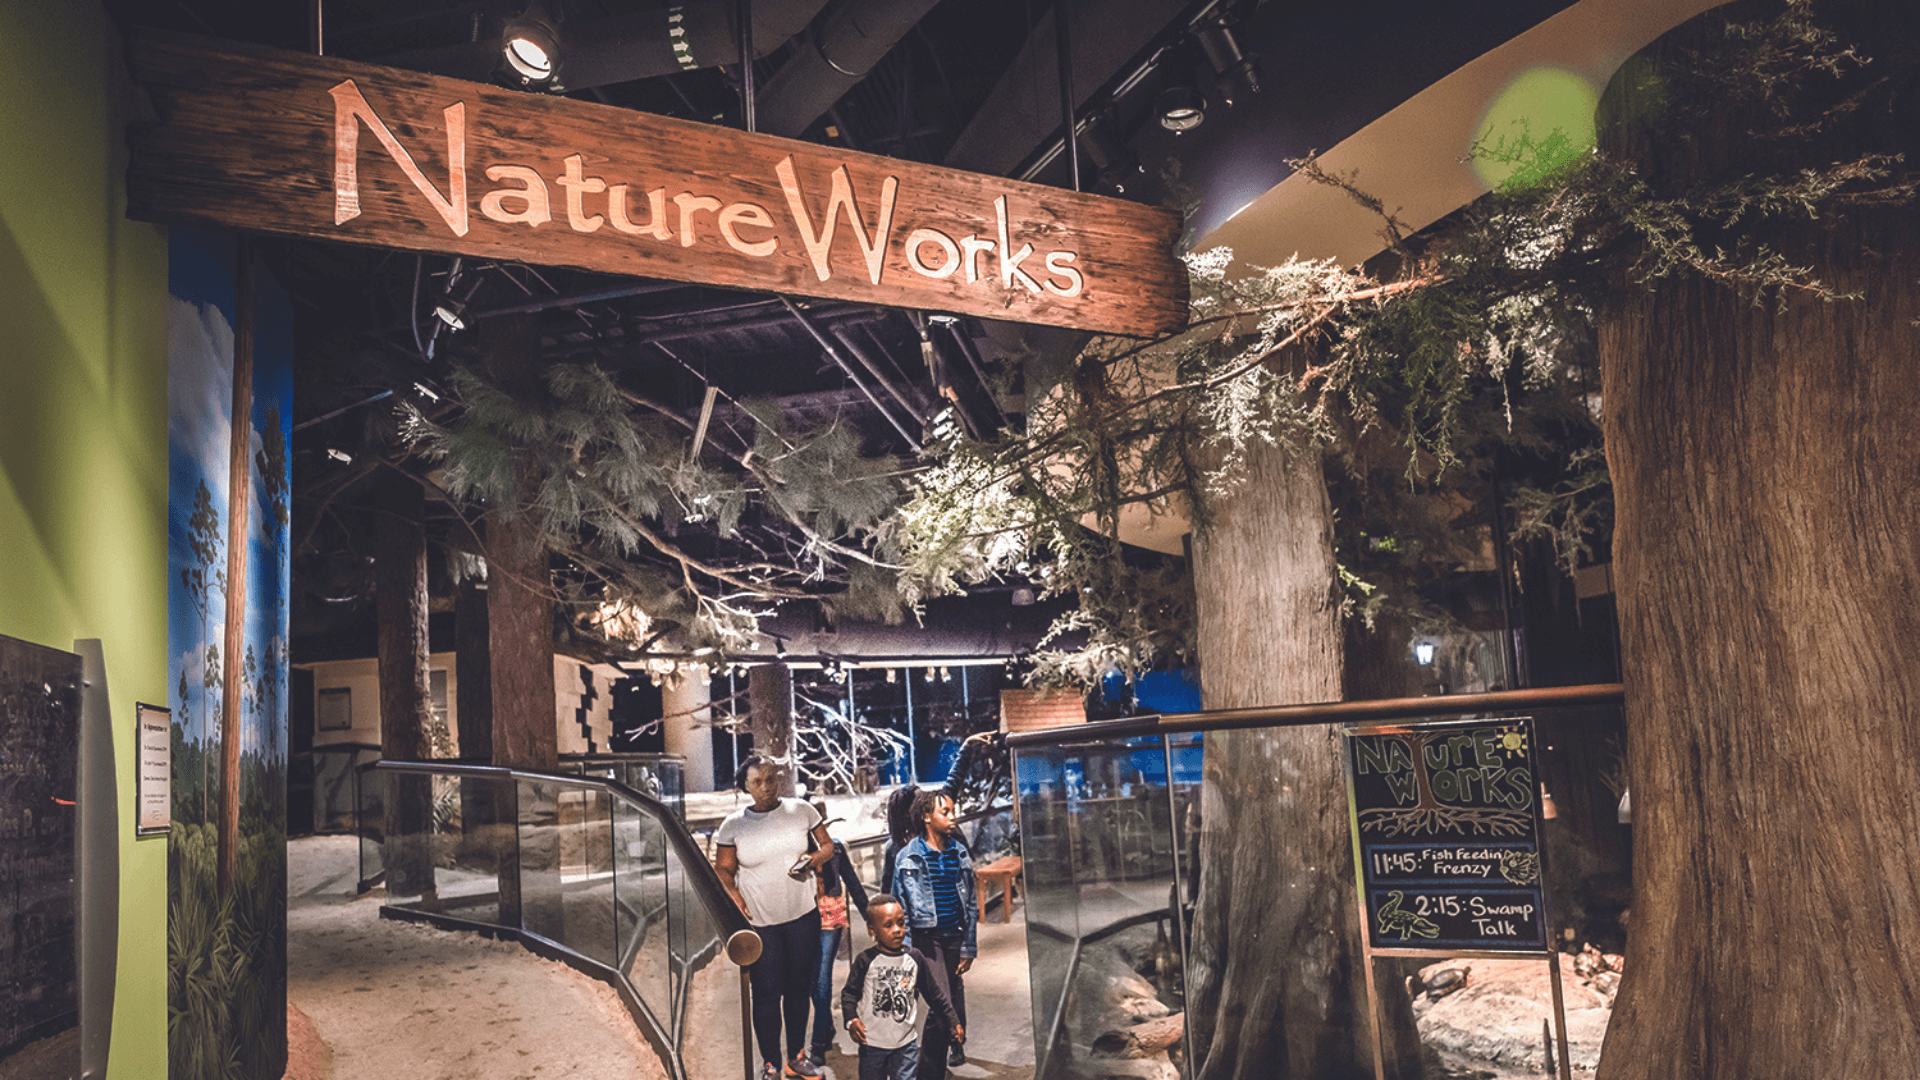 NatureWorks is Evolving! - Orlando Science Center